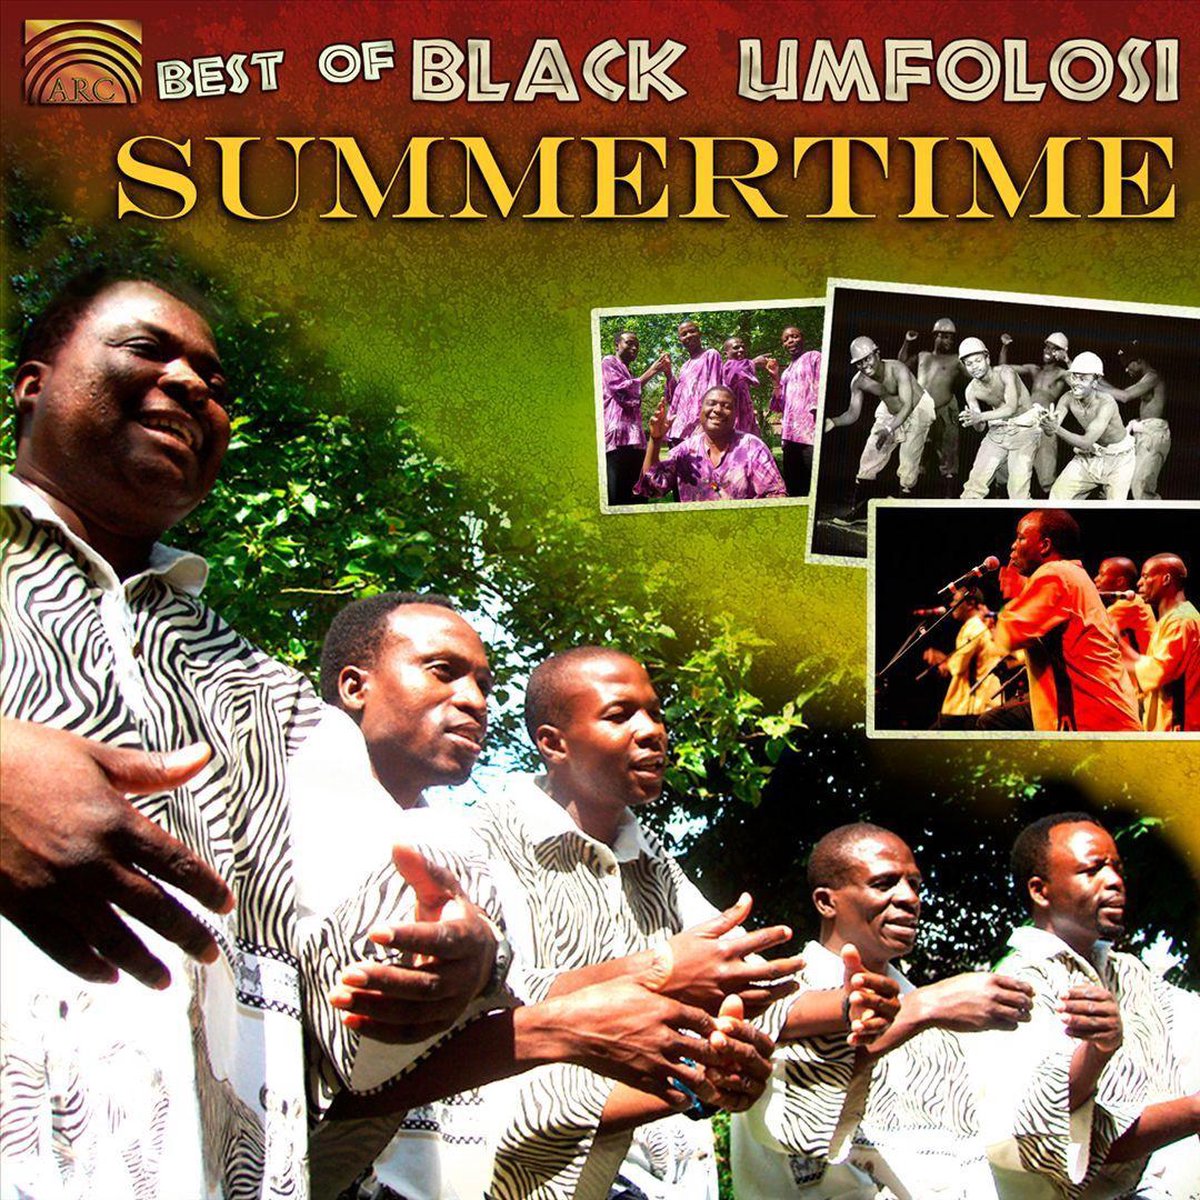 Summertime | The Black Umfolosi